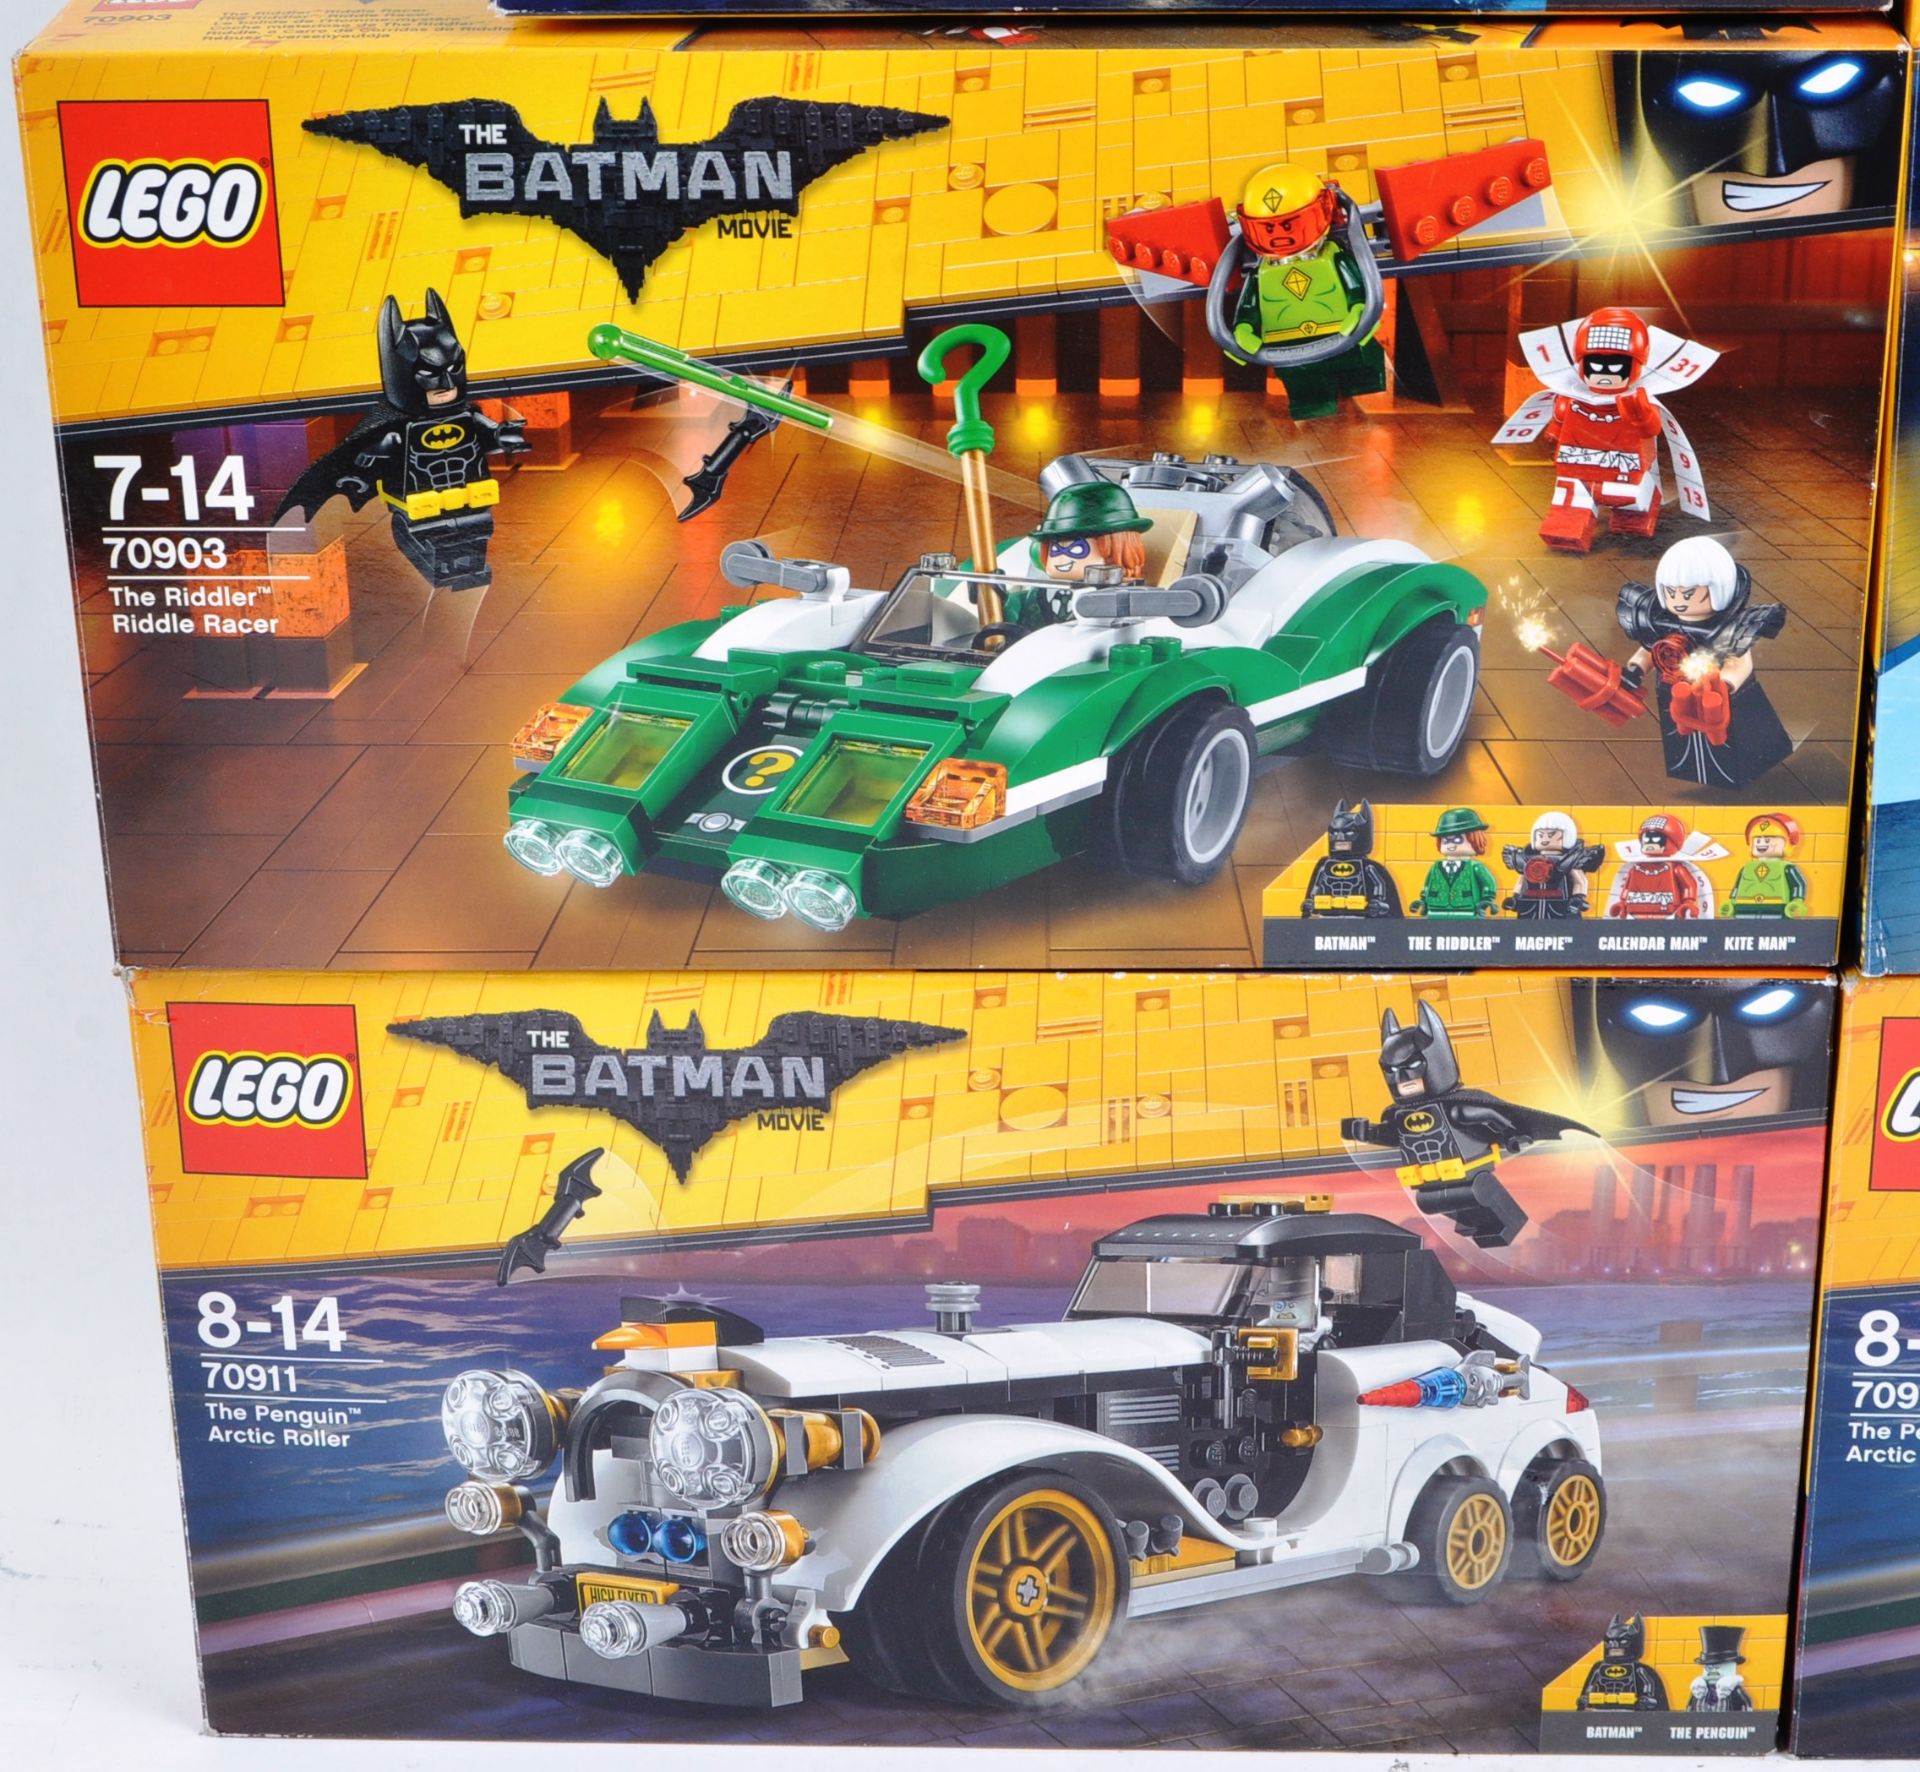 LEGO SETS - THE BATMAN MOVIE - Image 2 of 6